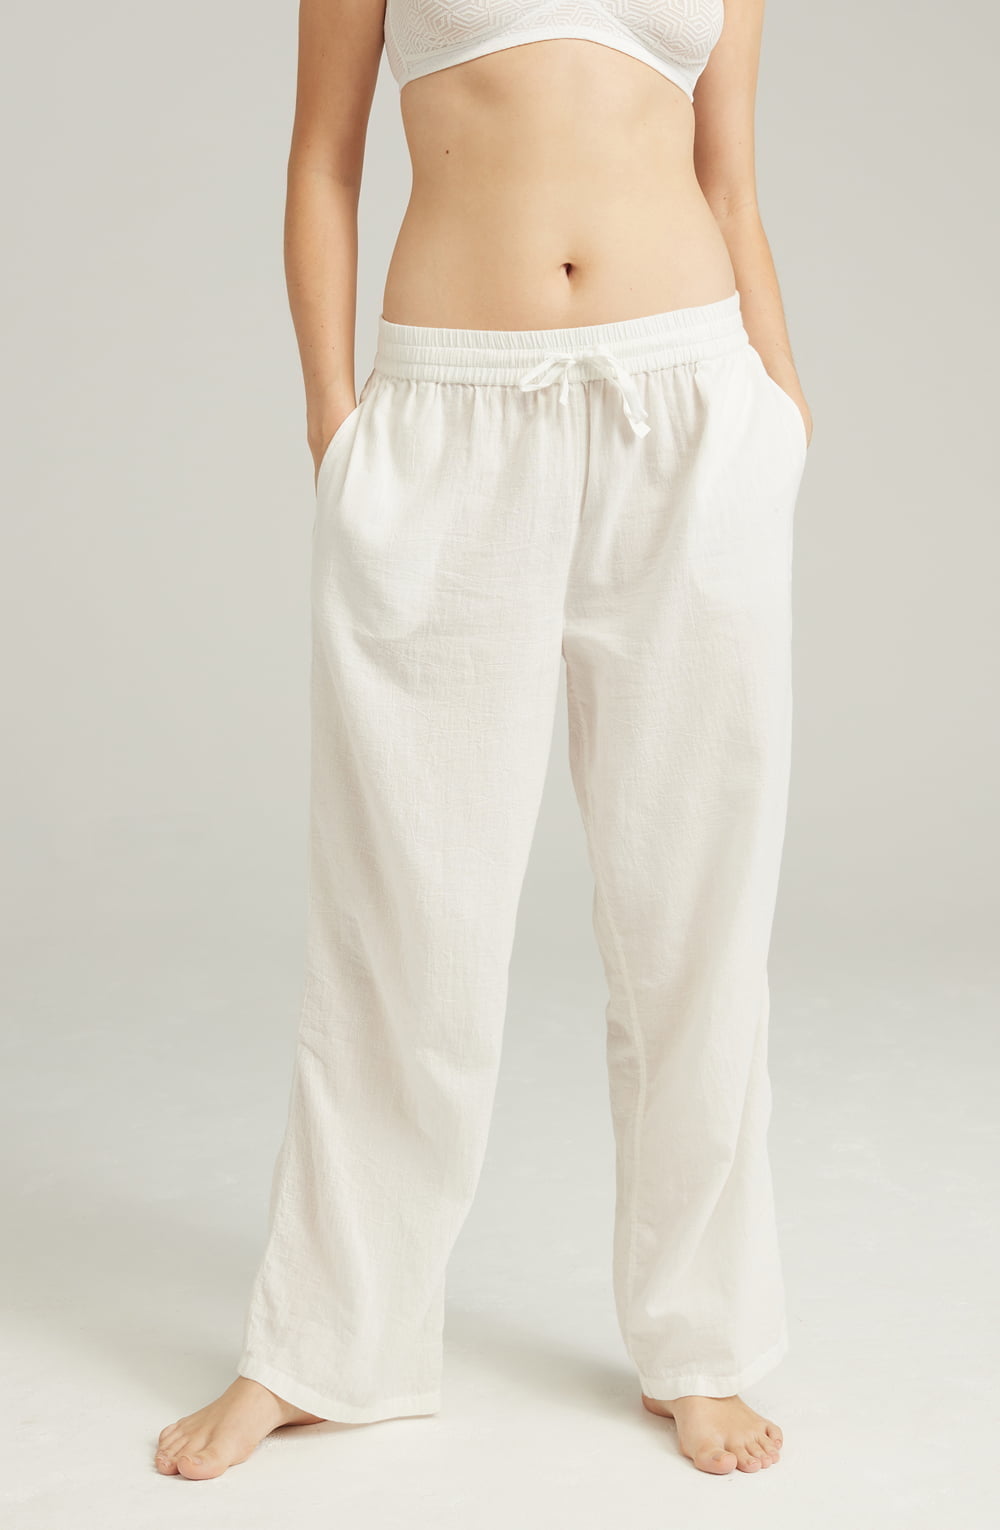 Classic Organic Cotton White Pajama Bottoms - Comfortable and Cozy Loungewear